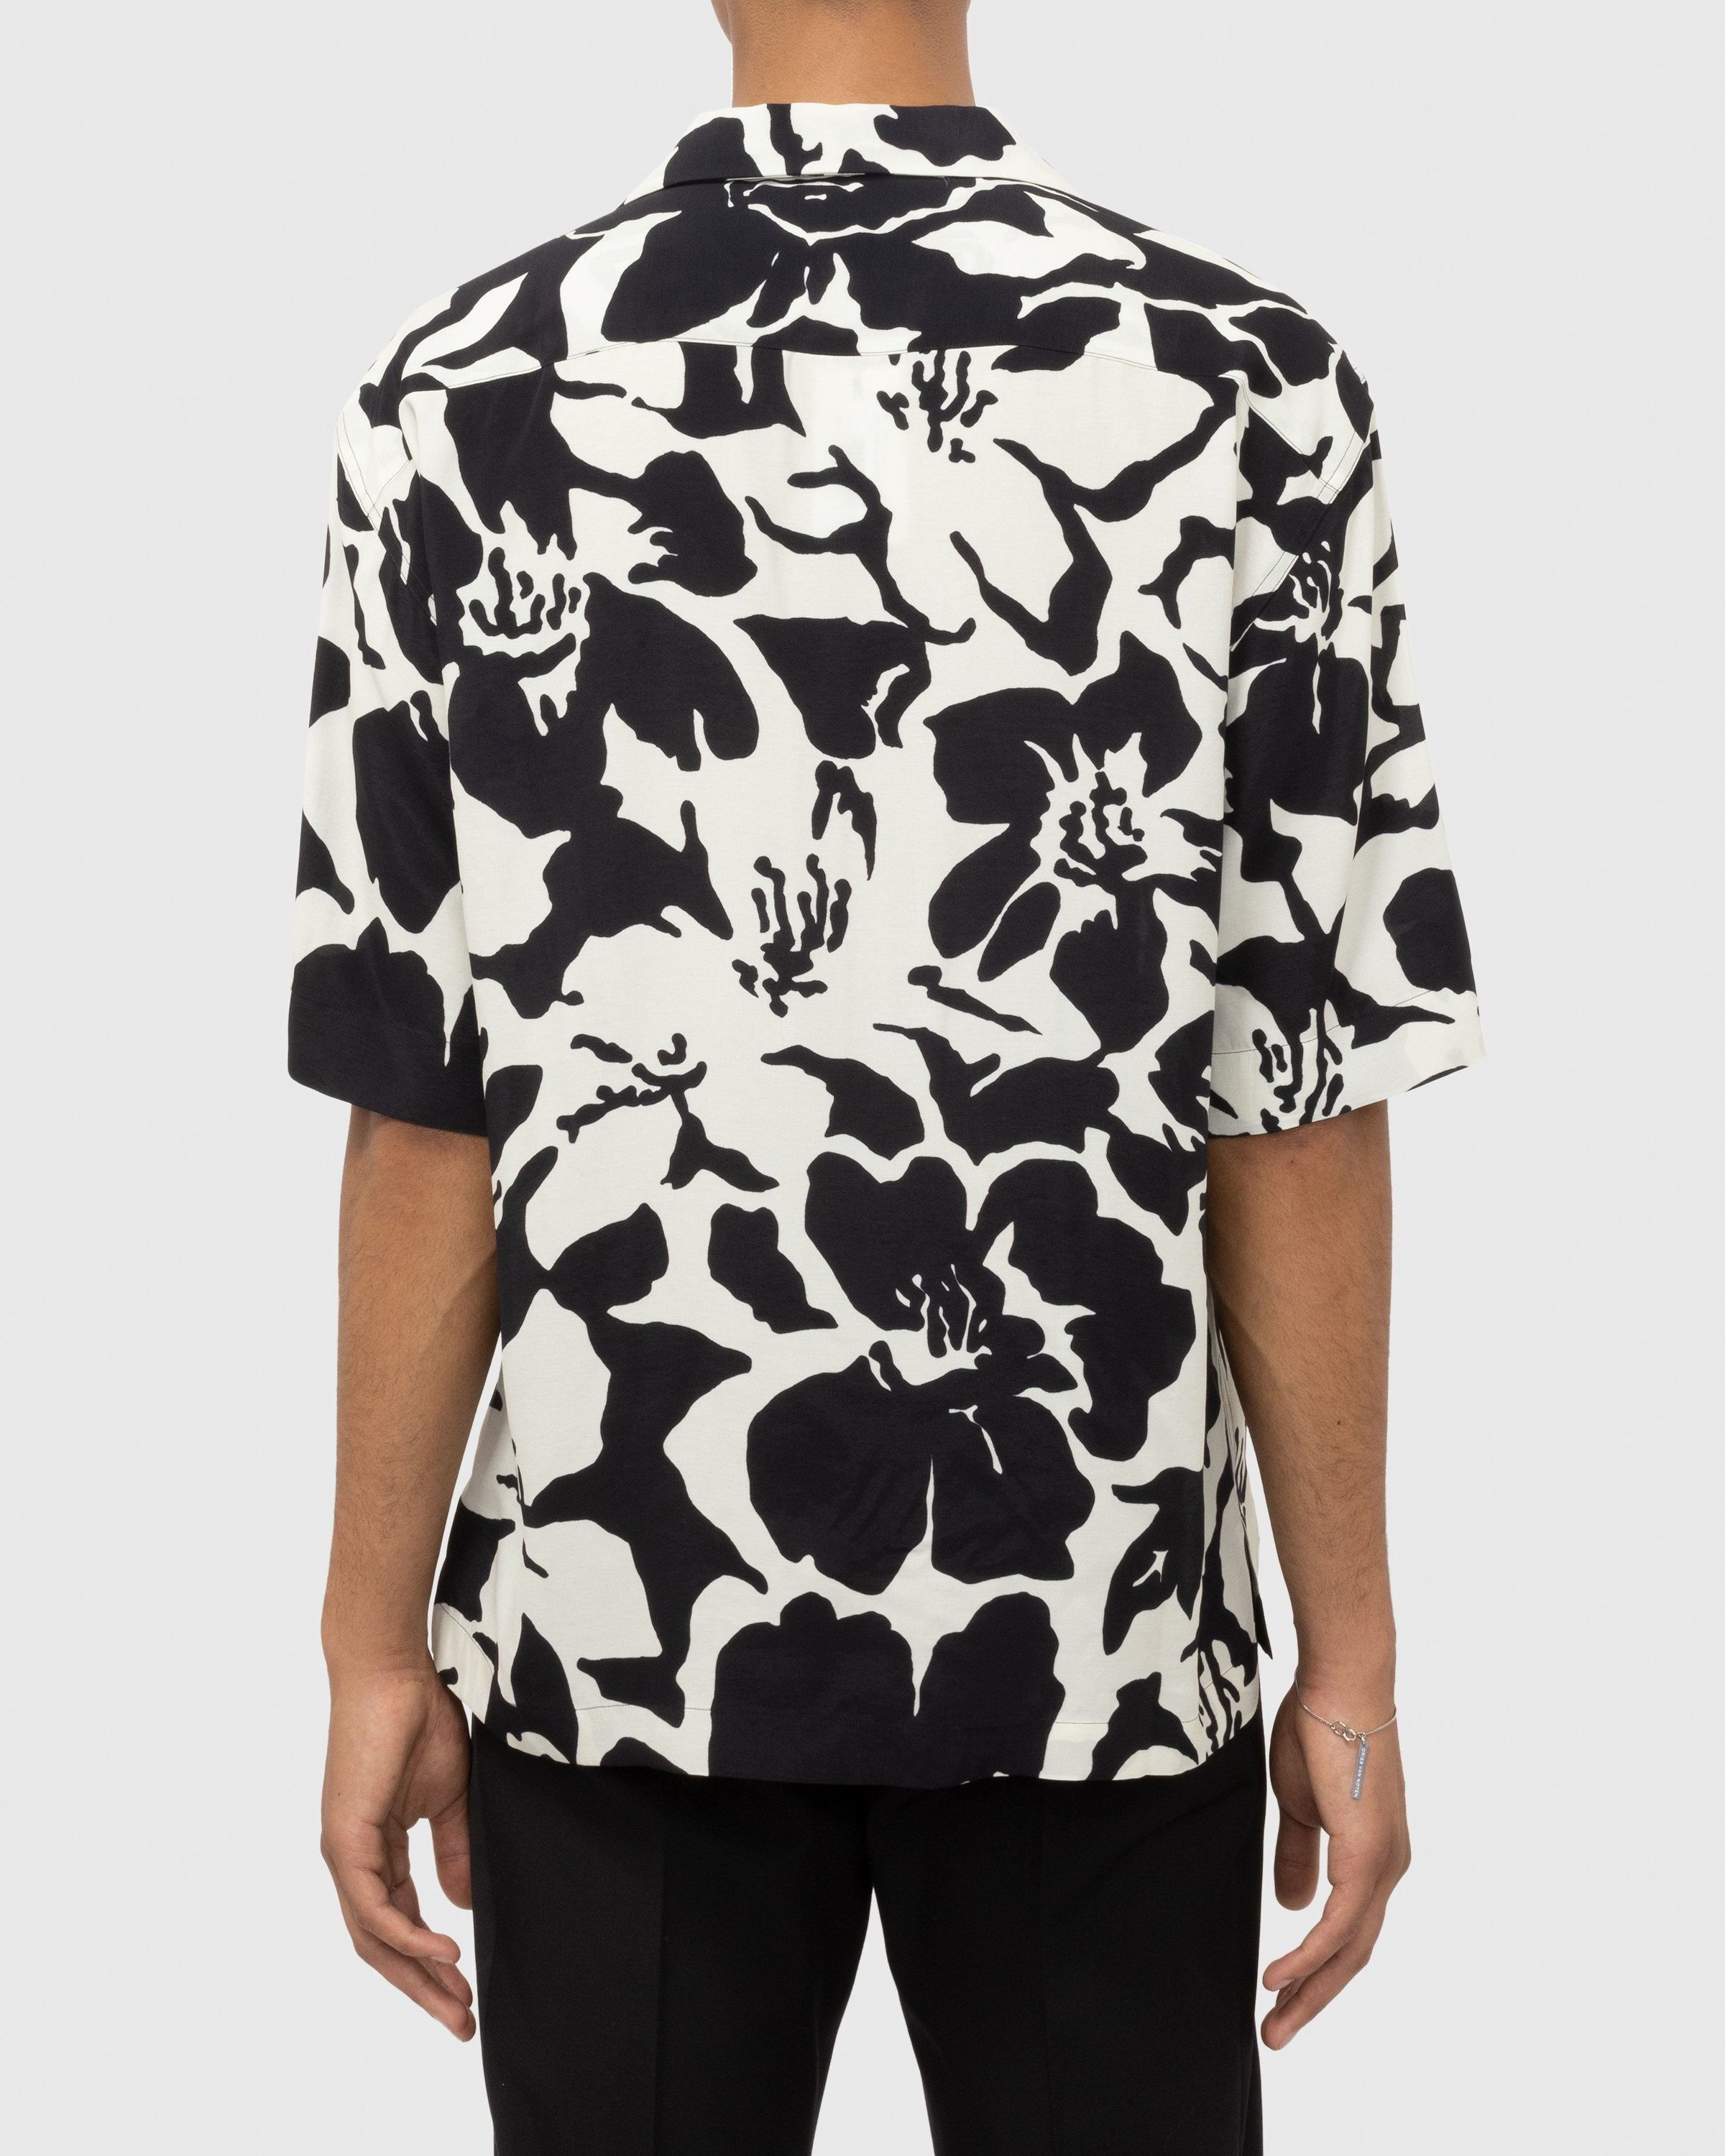 Dries van Noten – Floral Cassi Shirt Multi - Shirts - Multi - Image 4